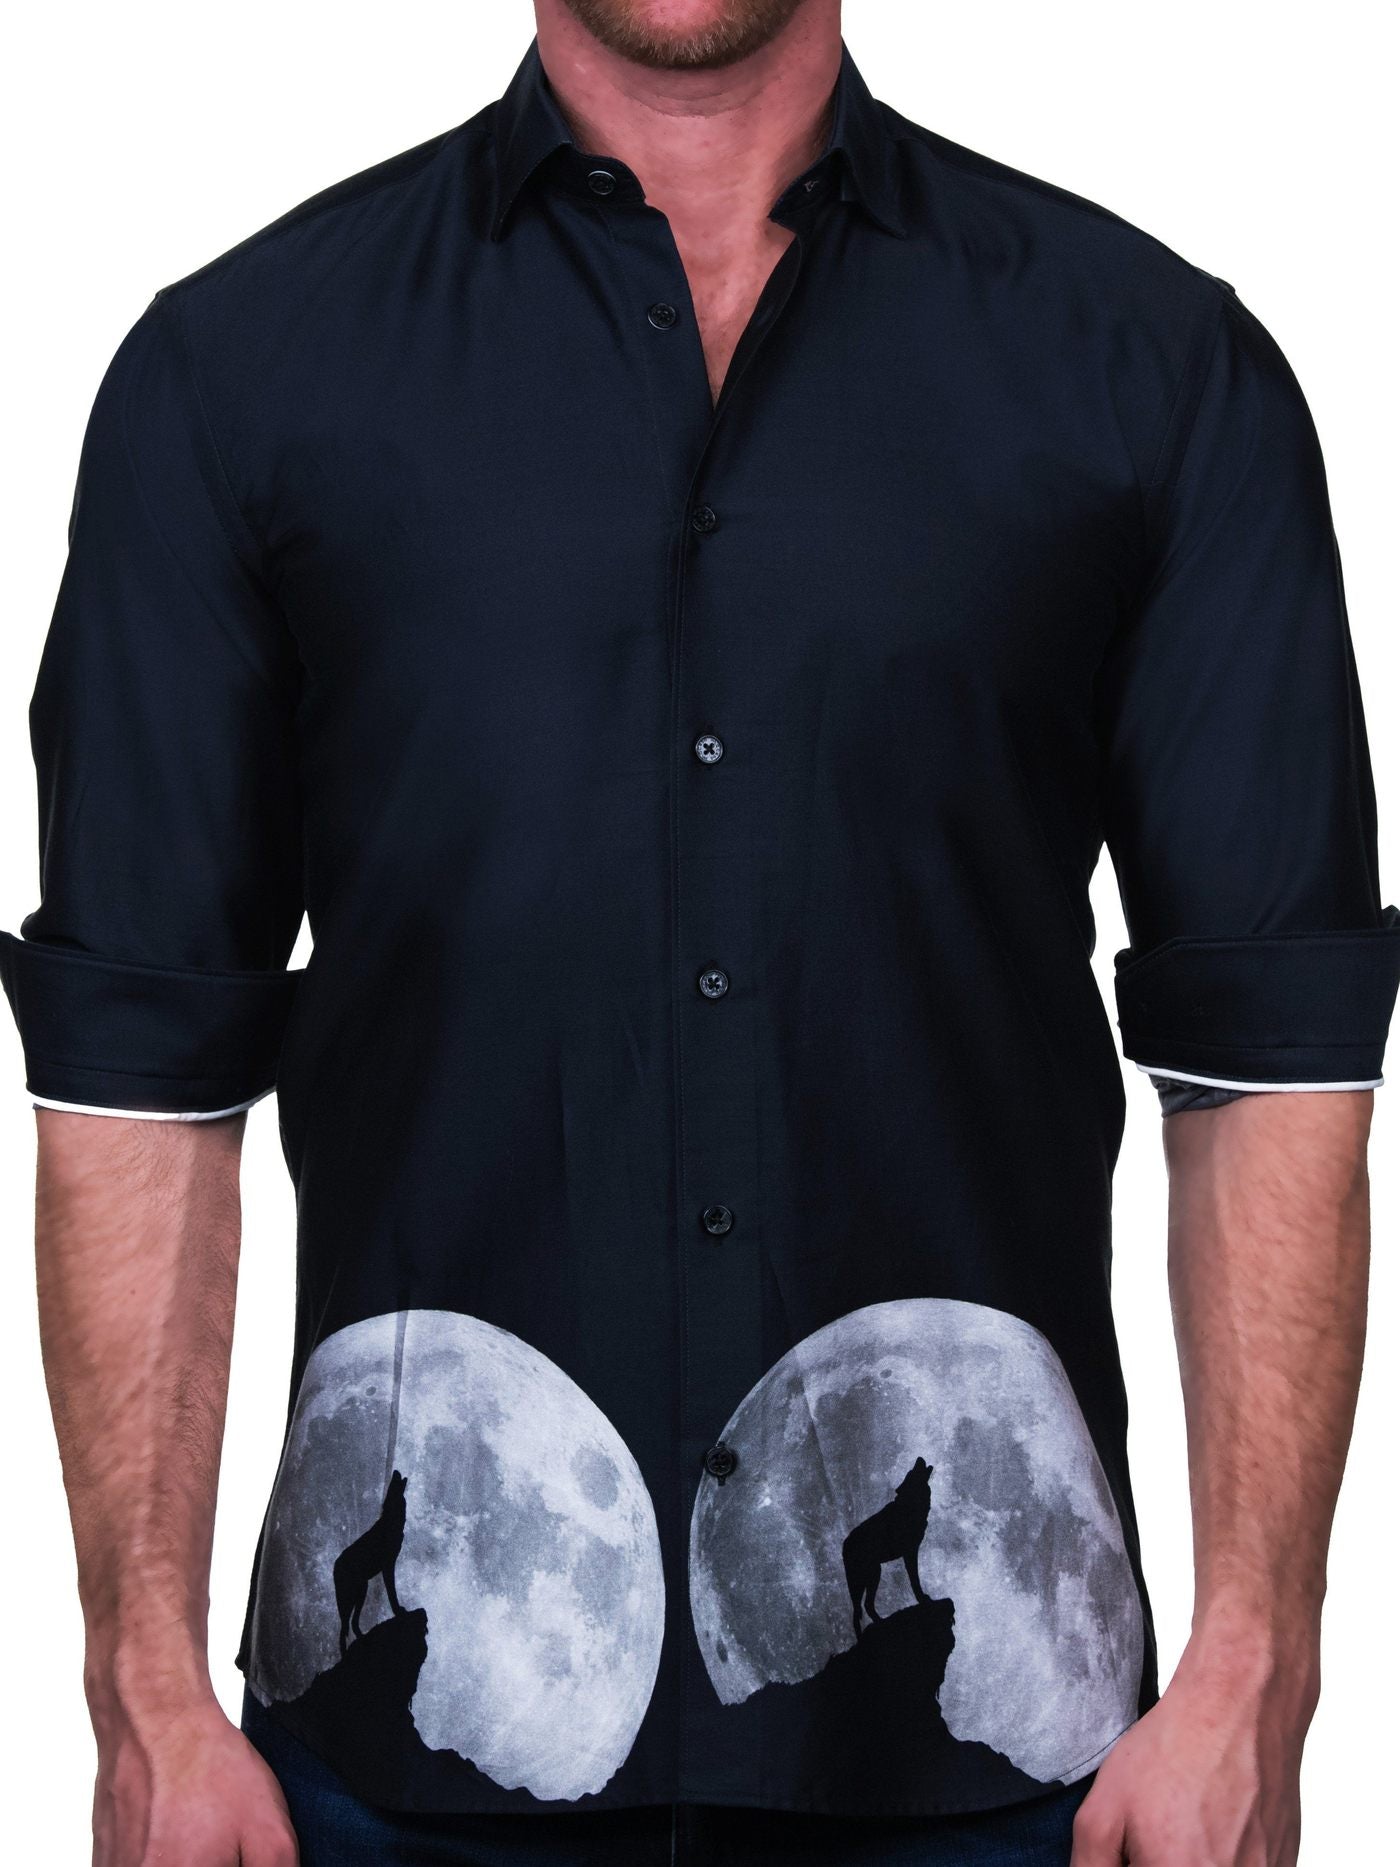 Maceoo Men’s Dress Shirt Wolf Black Long Sleeve Dress Shirt French Cuff Fashion